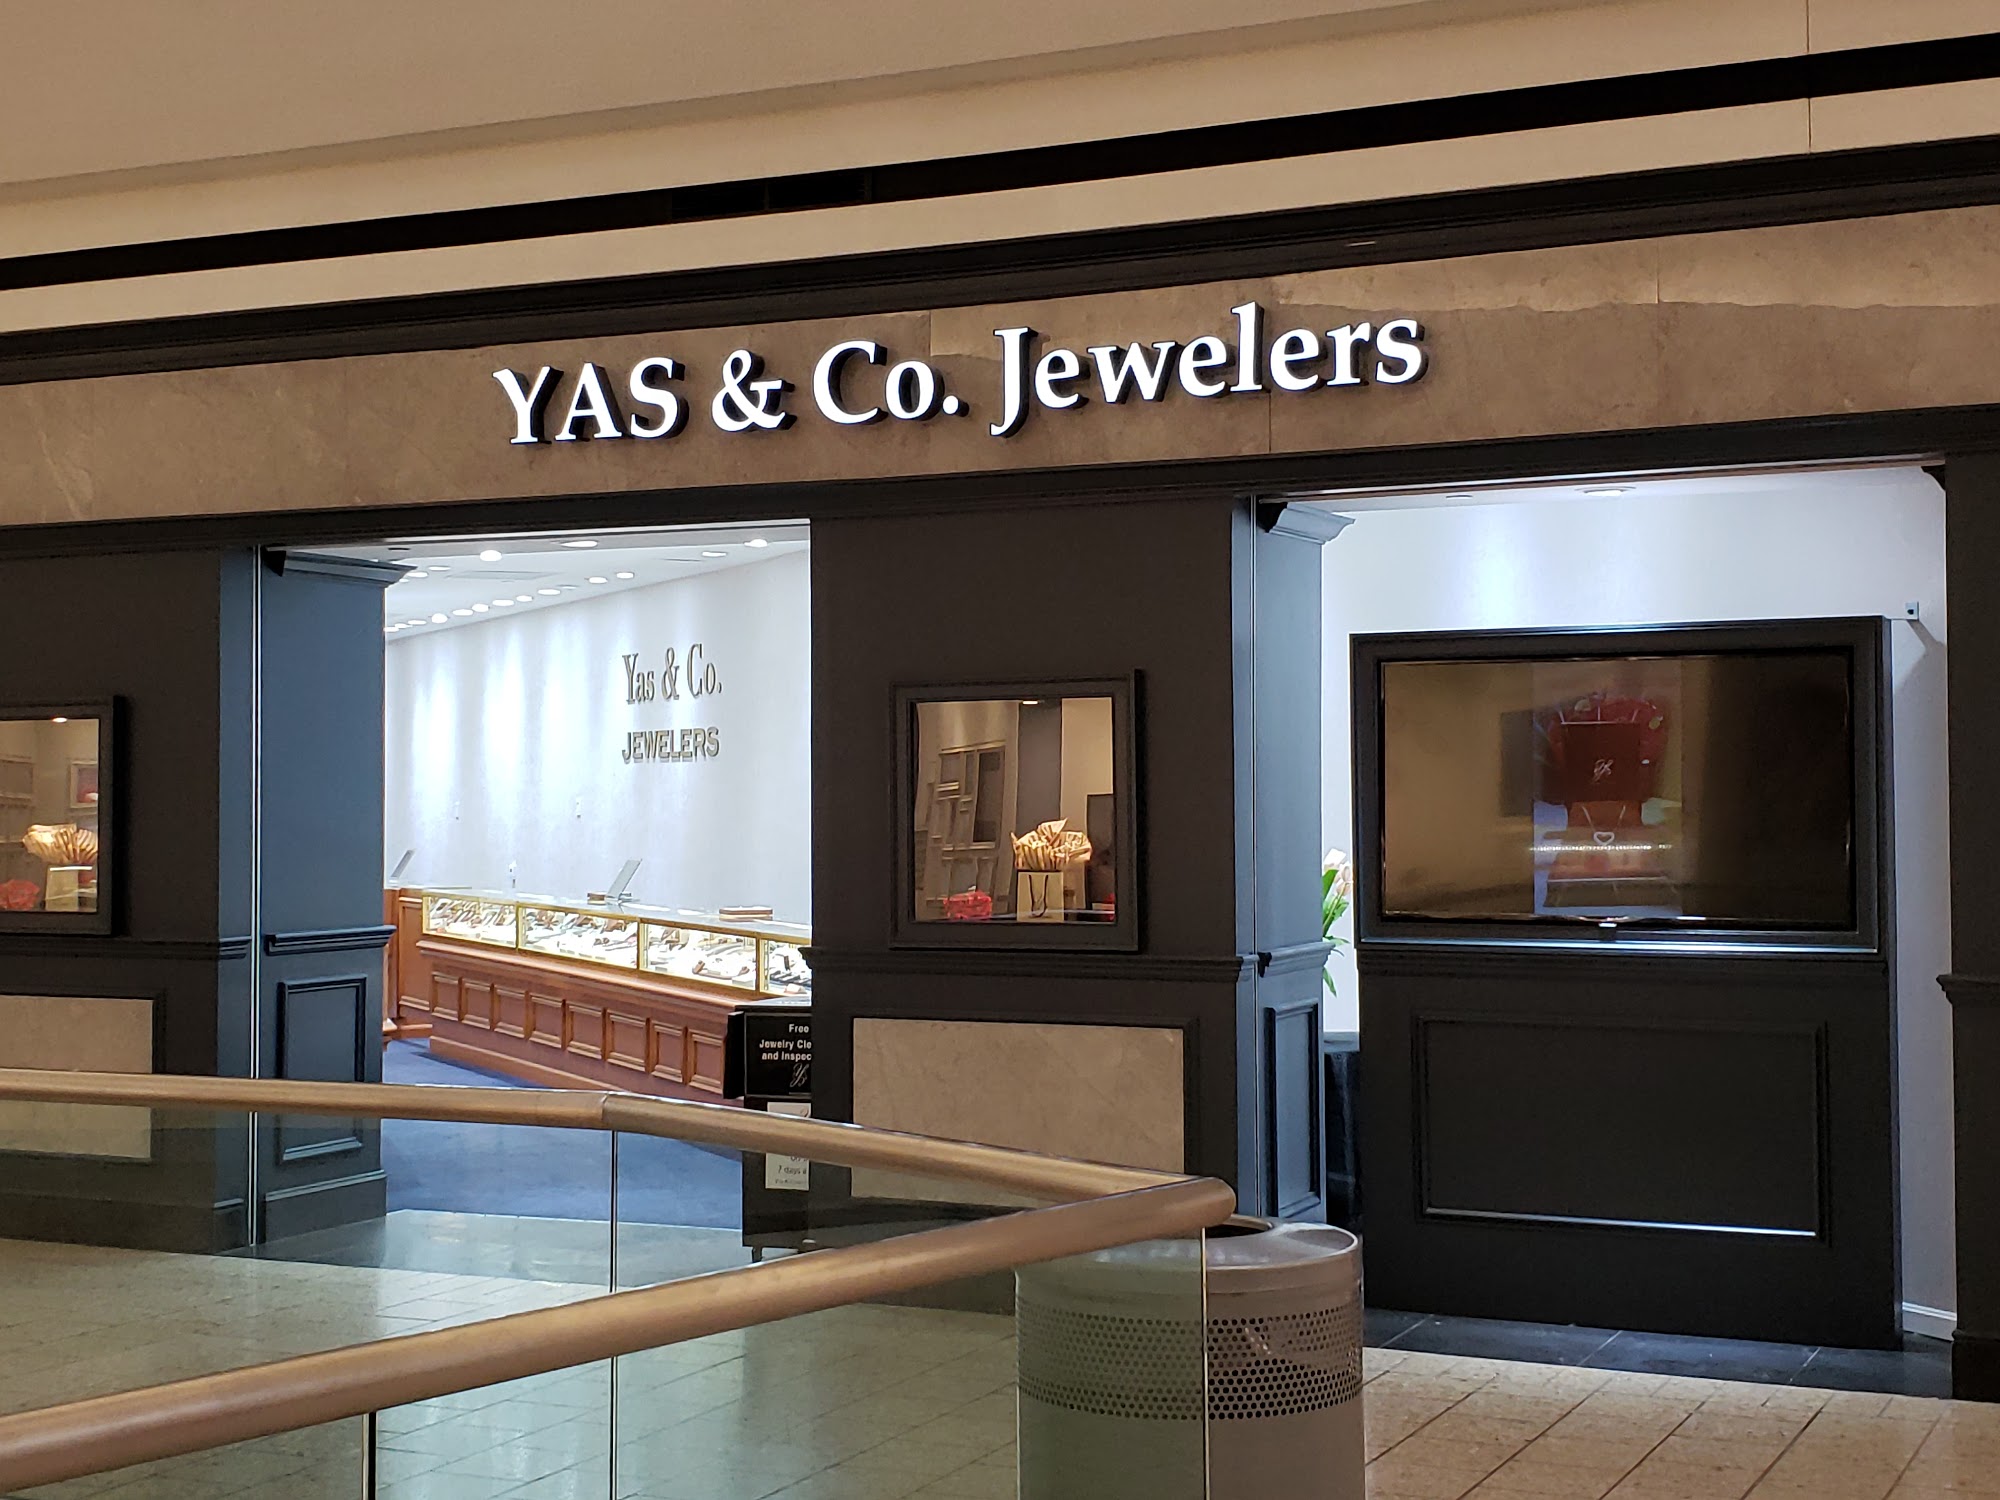 Yas & Co. Jewelers